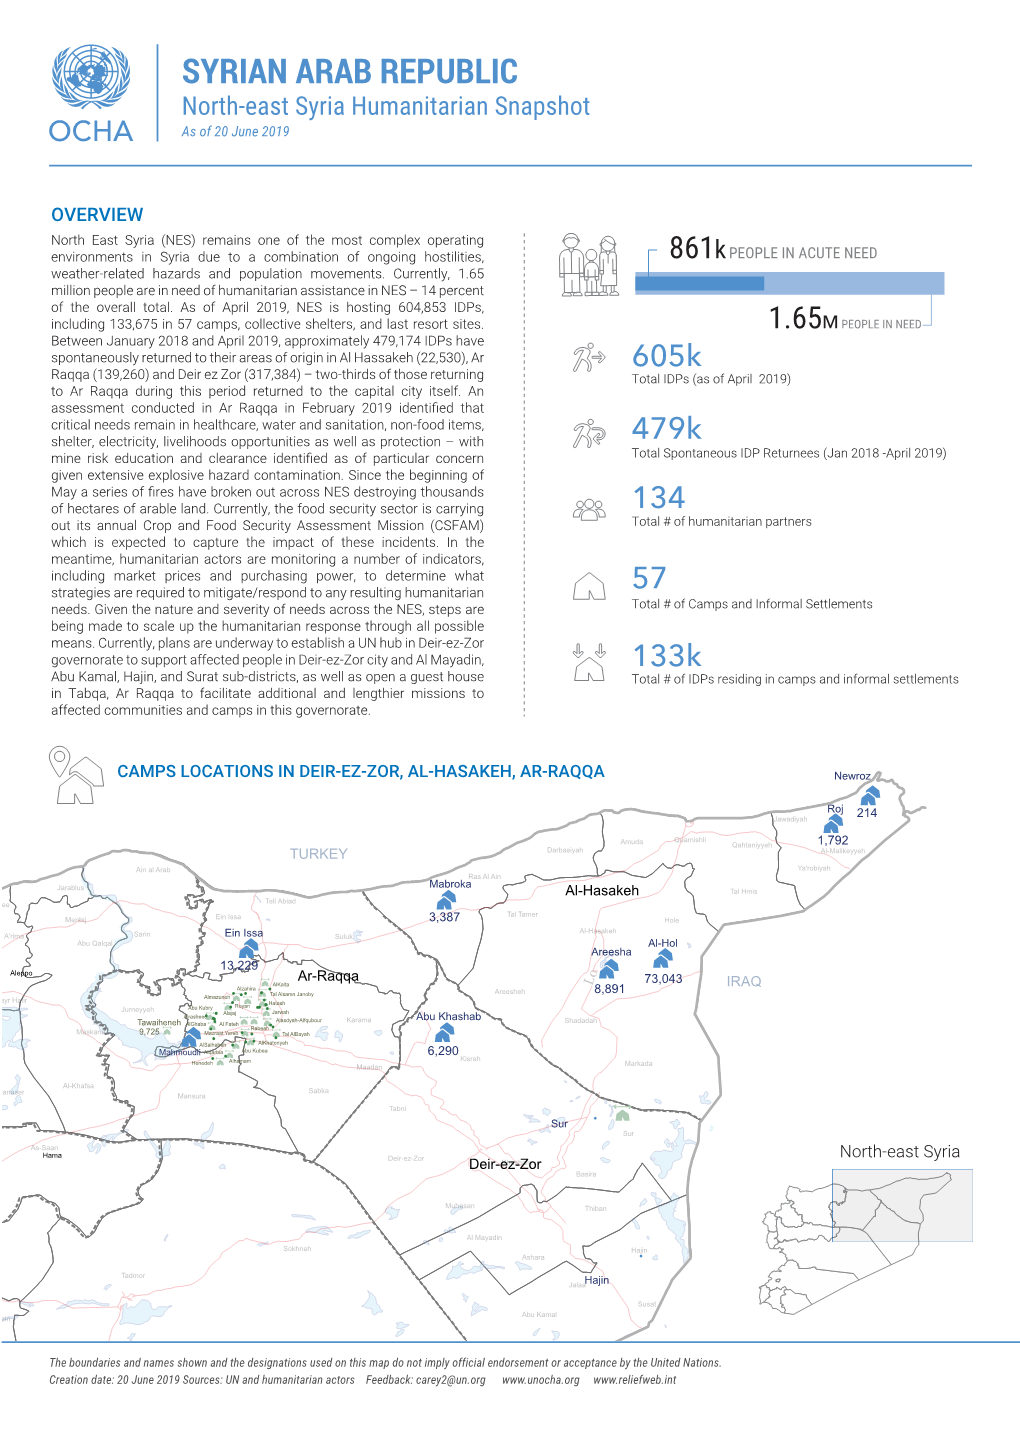 SYRIAN ARAB REPUBLIC North-East Syria Humanitarian Snapshot As of 20 June 2019